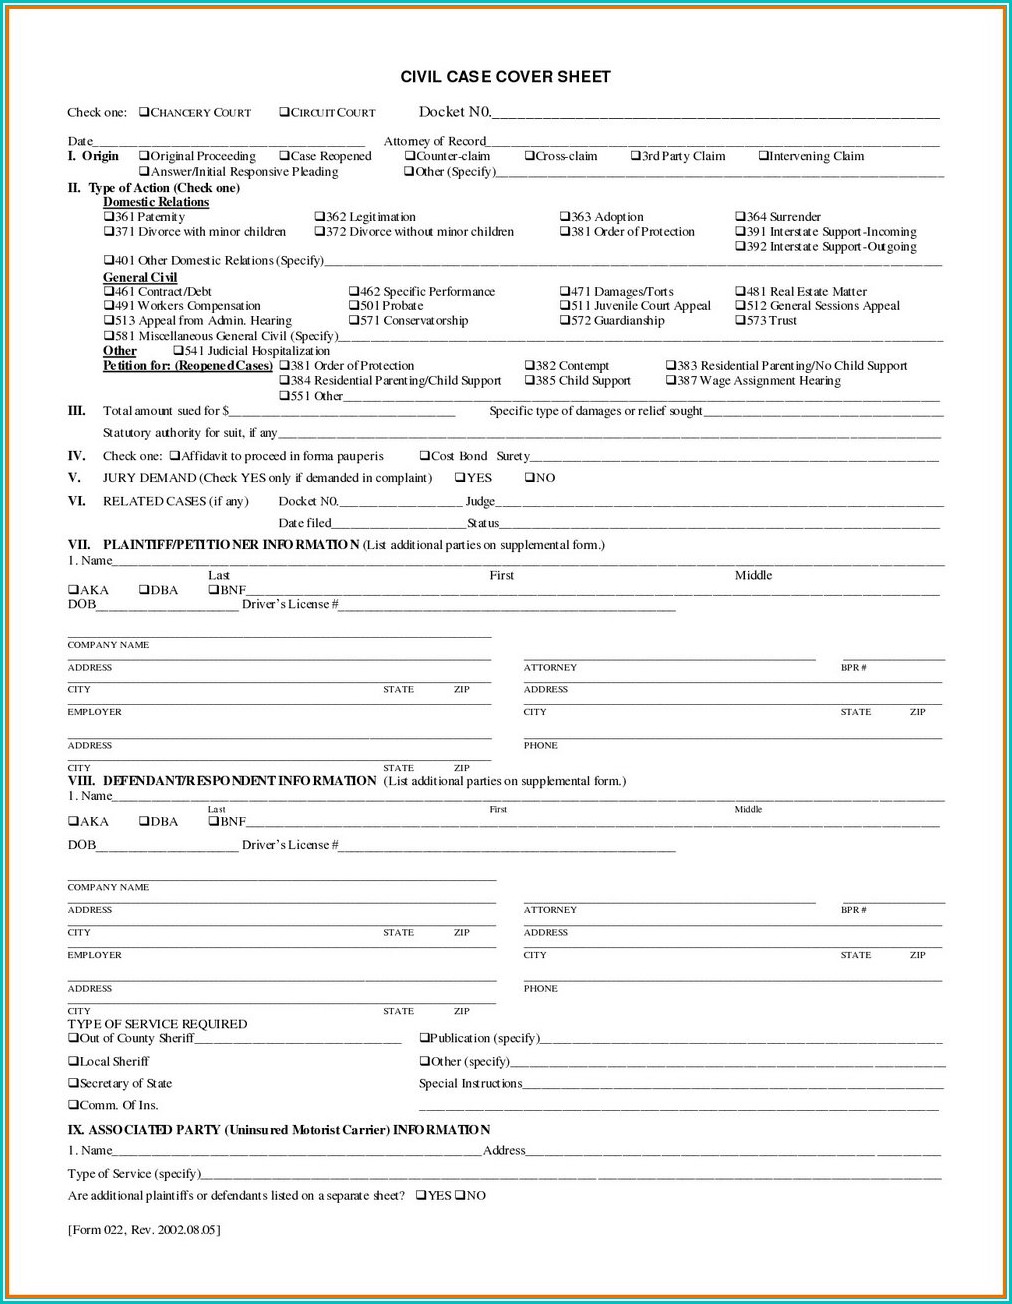 tennessee-divorce-forms-form-resume-examples-o7y36el9bn